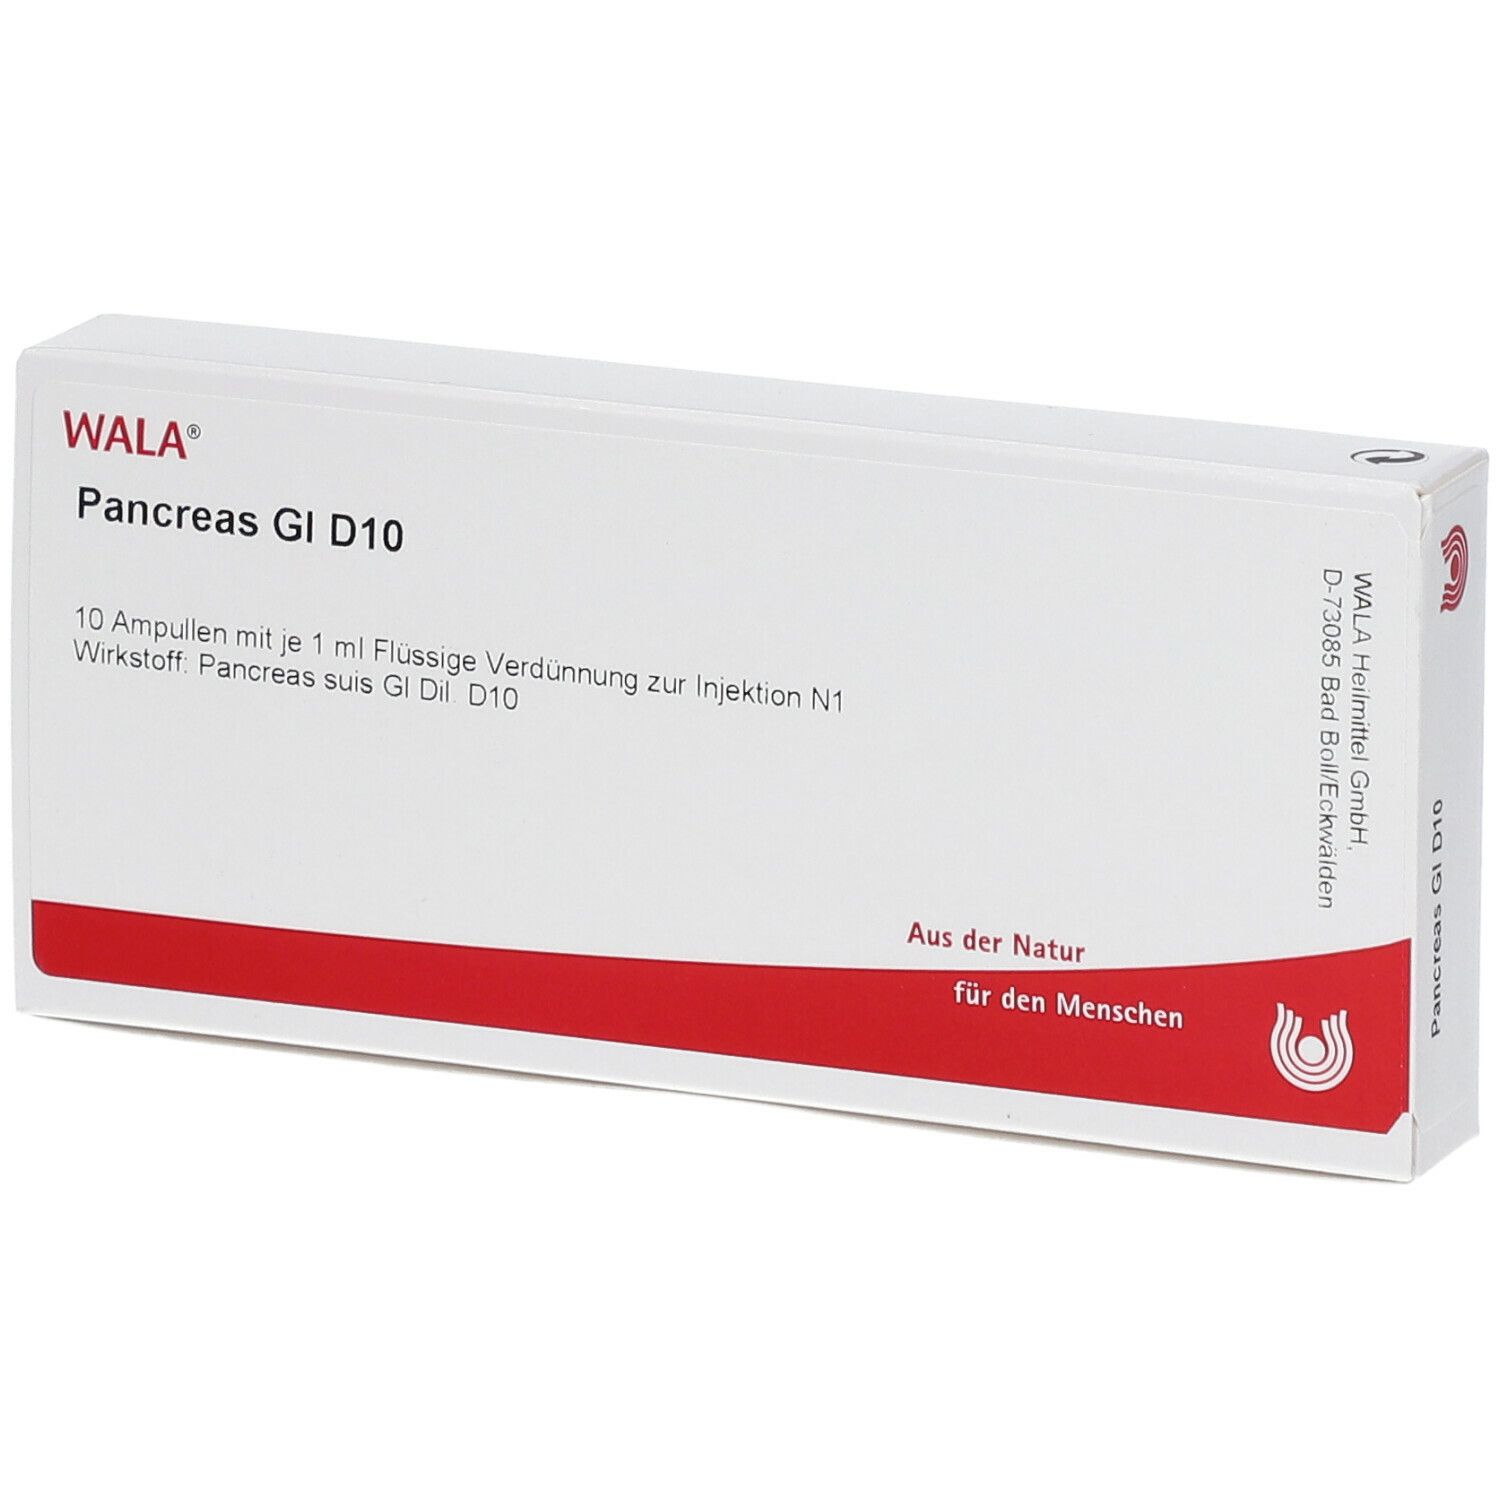 Wala® Pancreas Gl D 10 Amp.